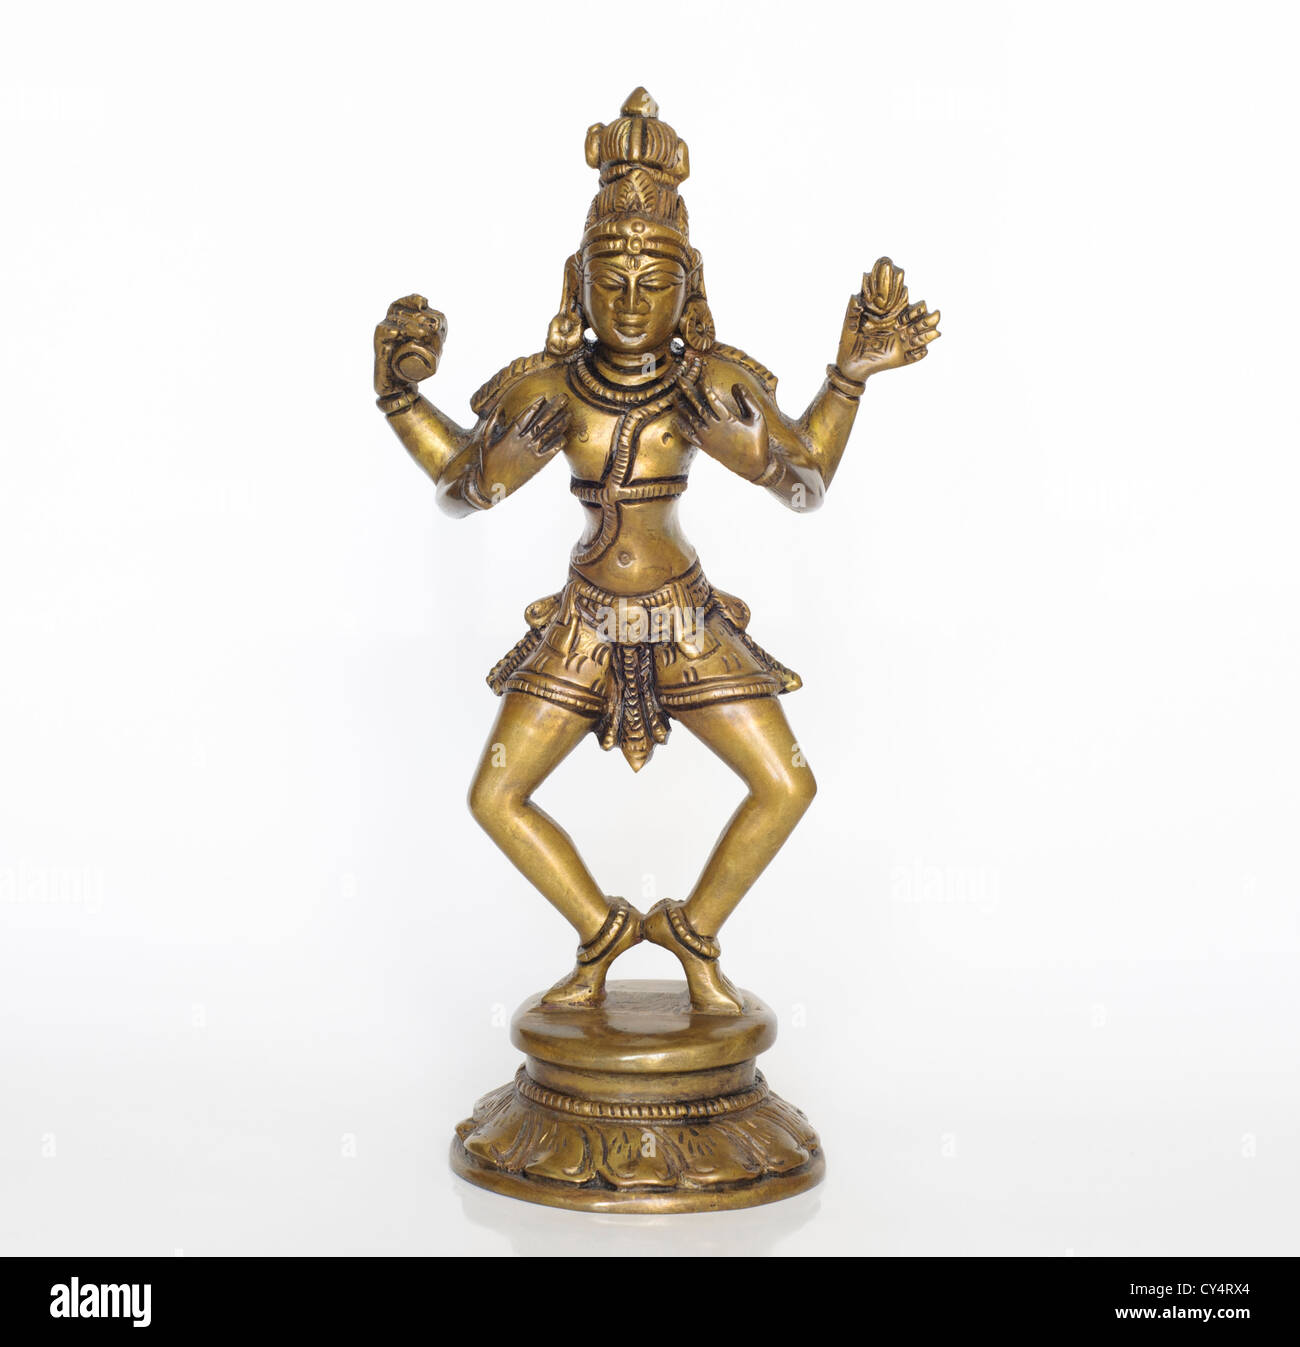 Small bronze statuette of the Hindu god Shiva Stock Photo